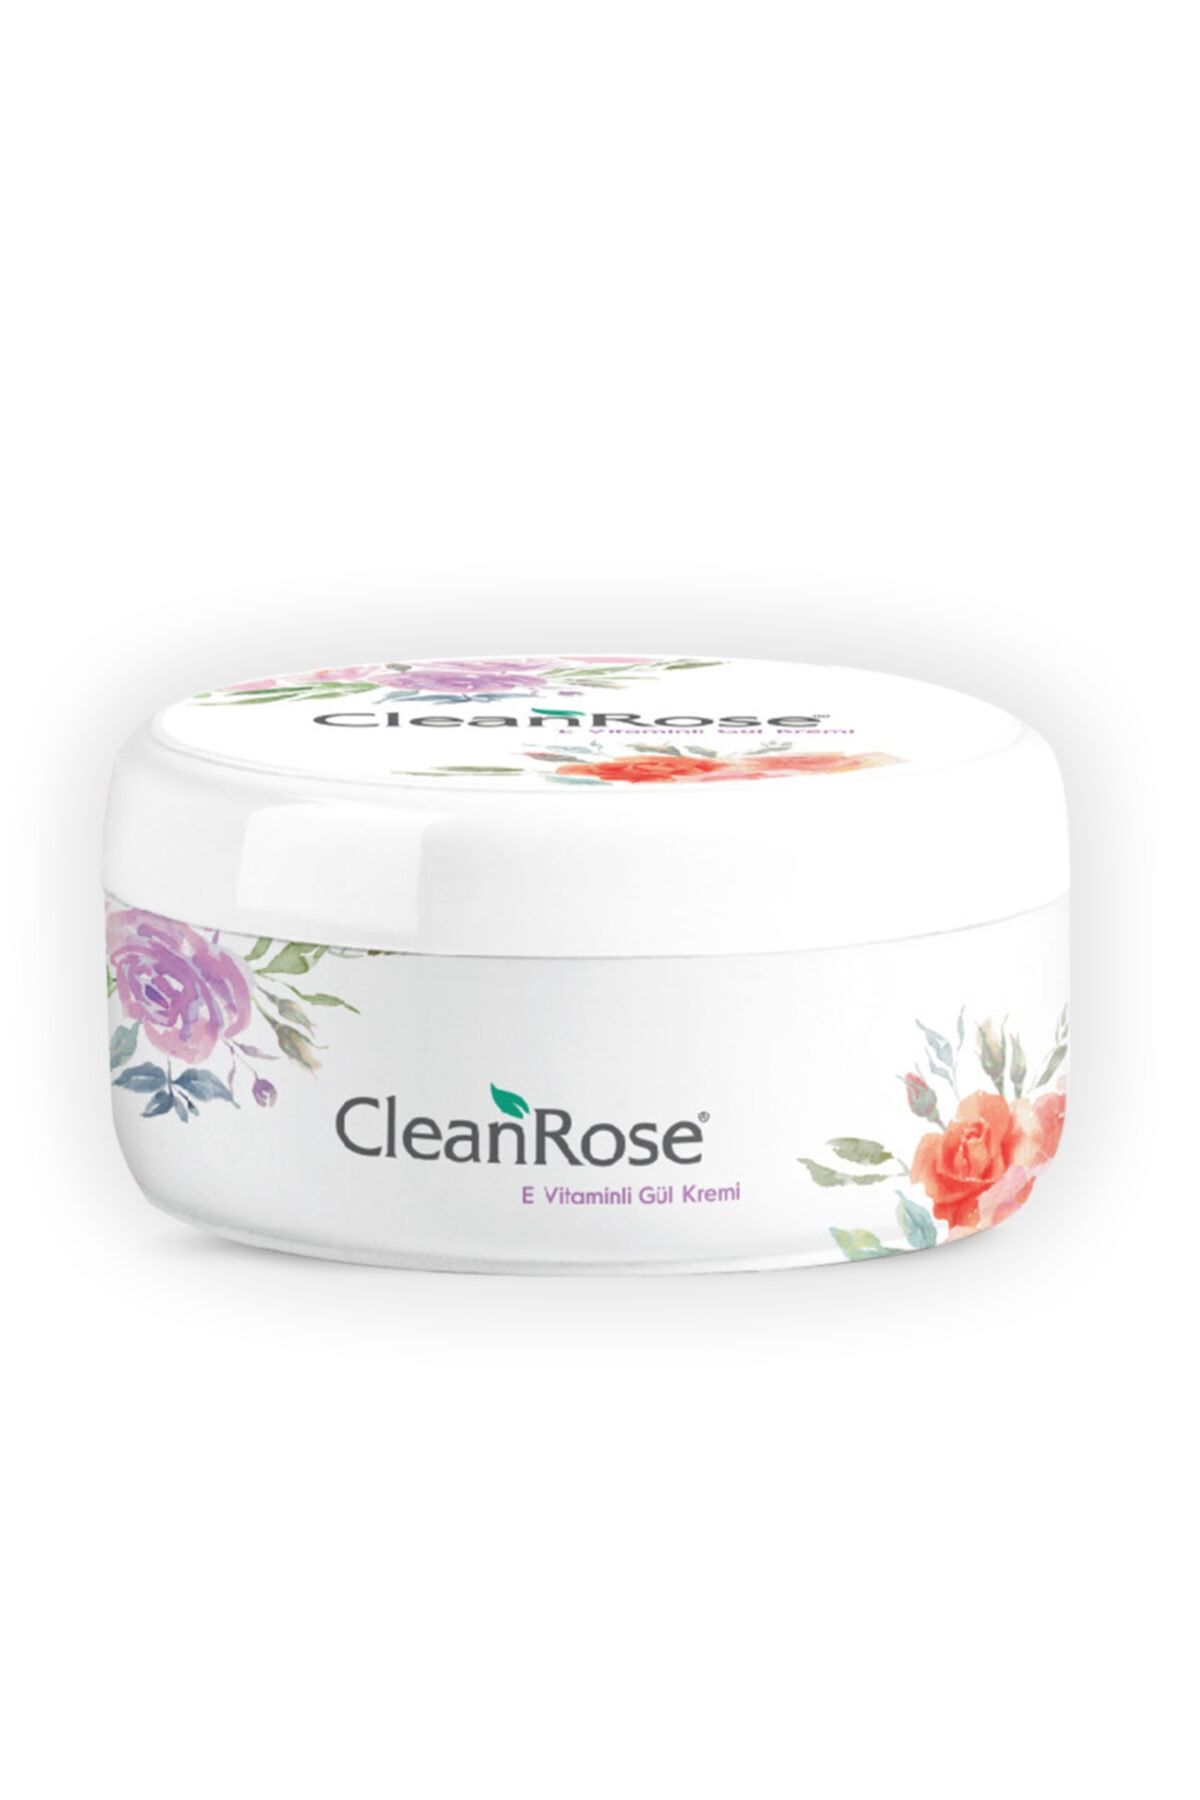 Clean Rose E Vitaminli Gül Krem 12 ml